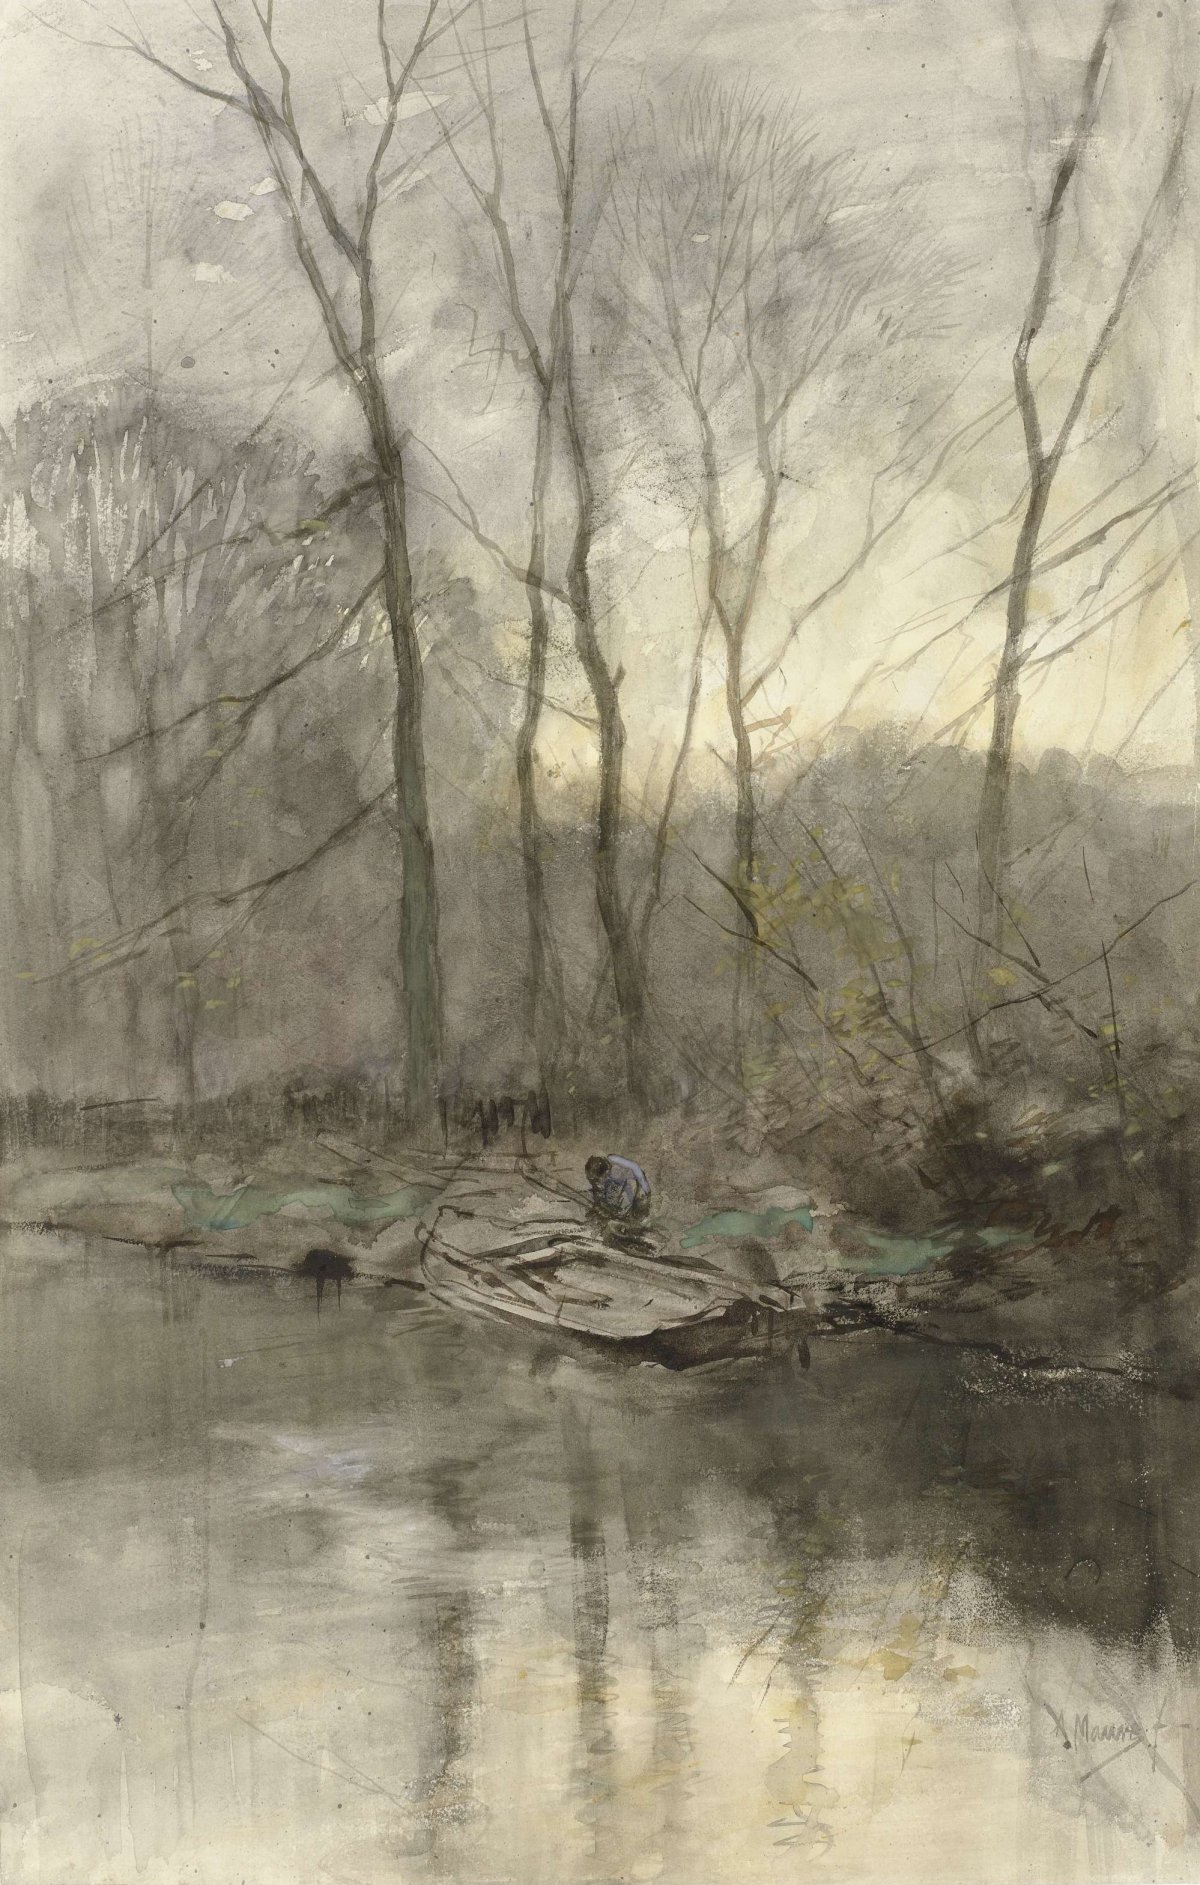 Waterfront forest edge, Anton Mauve, 1848 - 1888